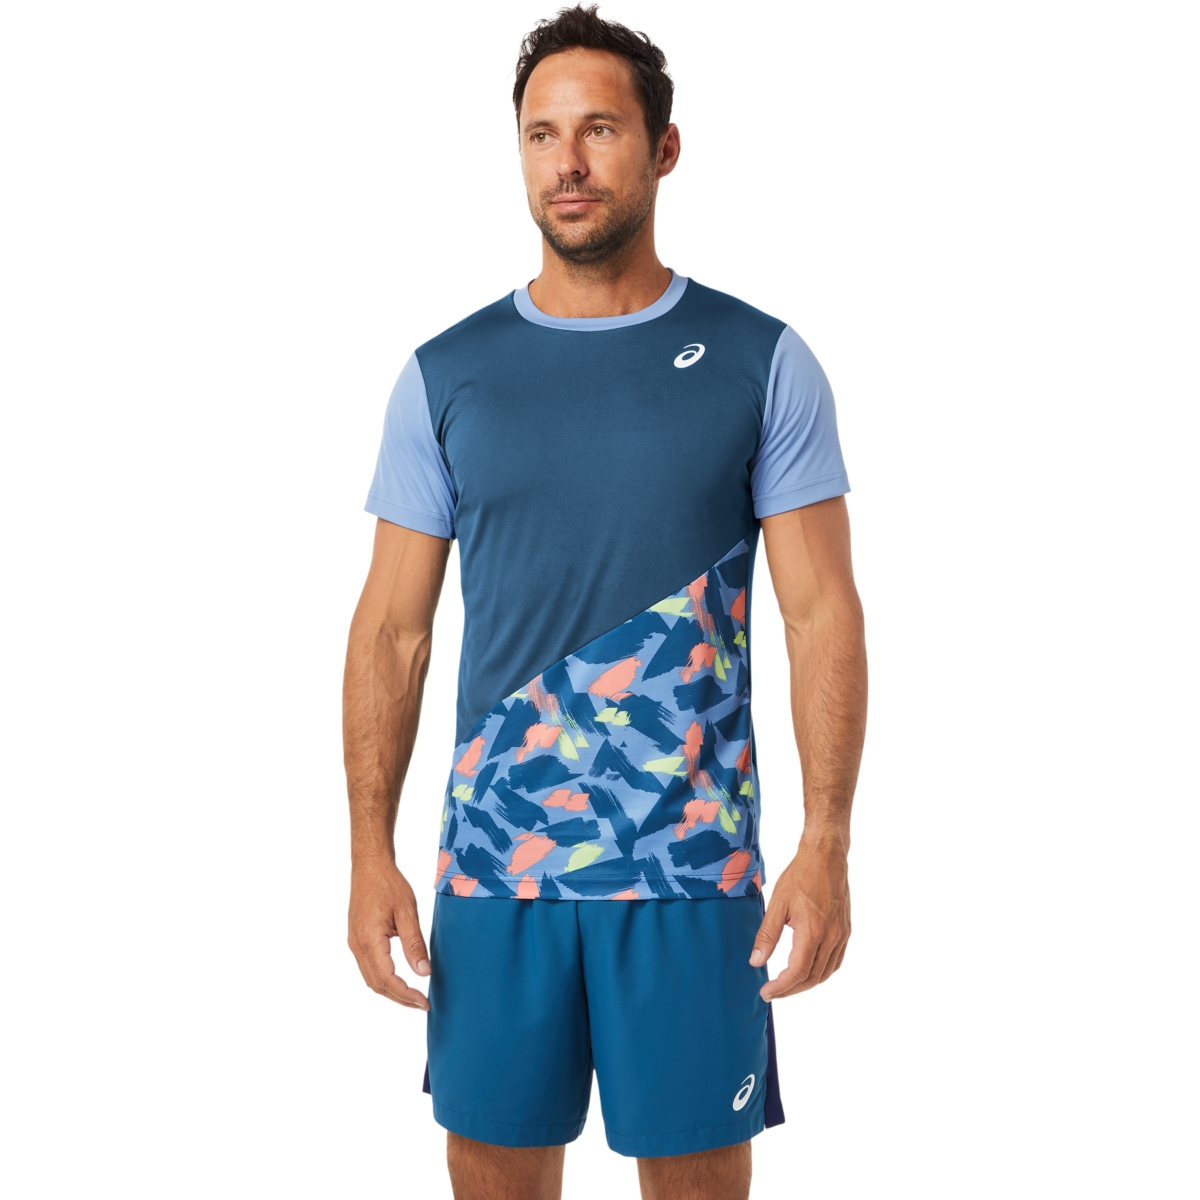 Мужская теннисная одежда ASICS COURT GRAPHIC с короткими рукавами 2041A216